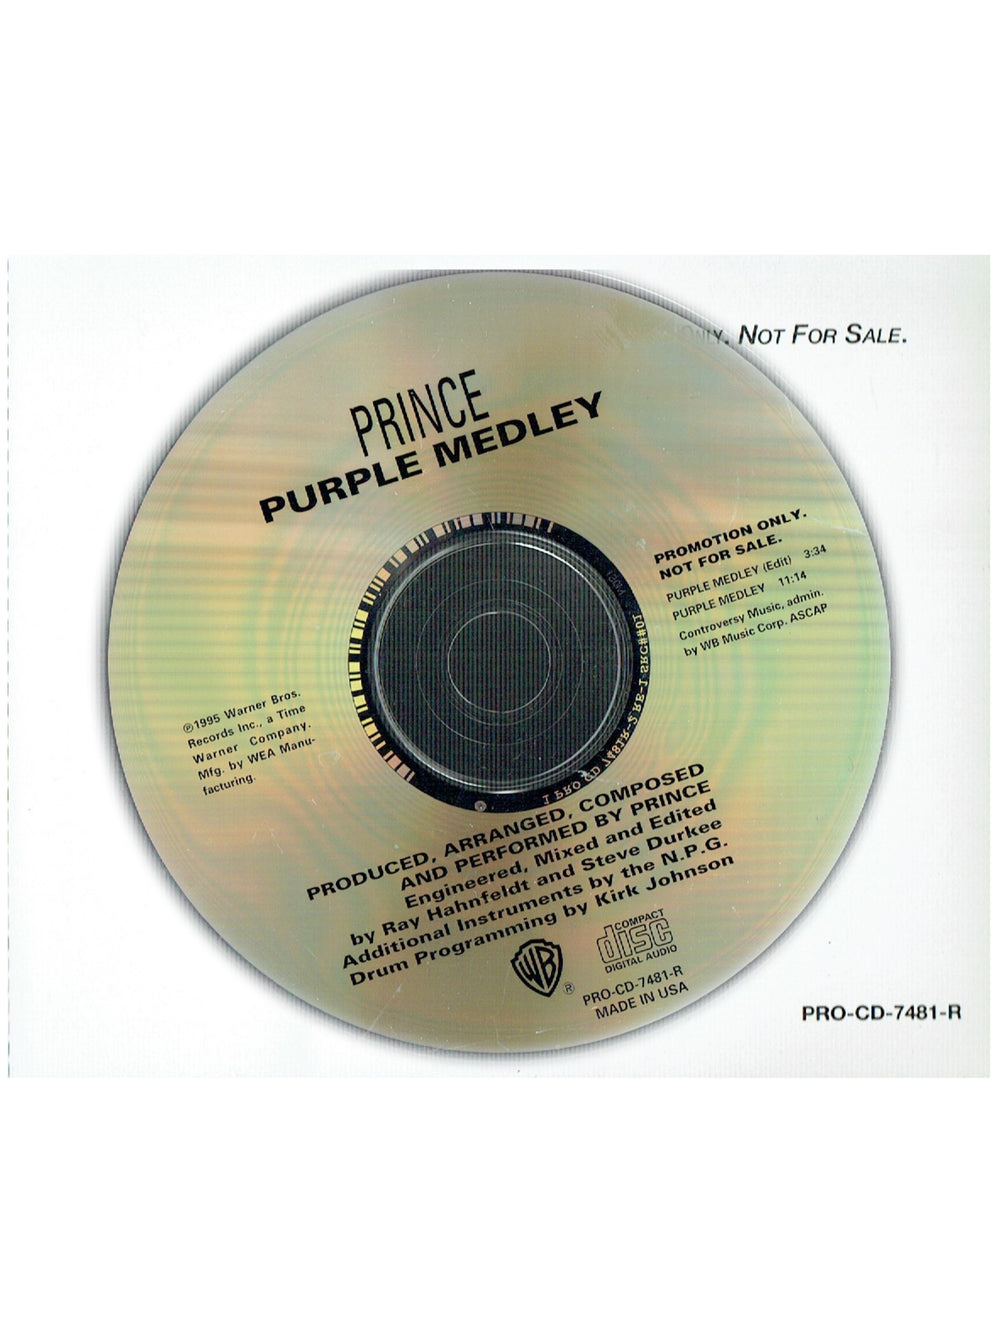 Prince – Purple Medley CD Single Promo US Preloved: 1995